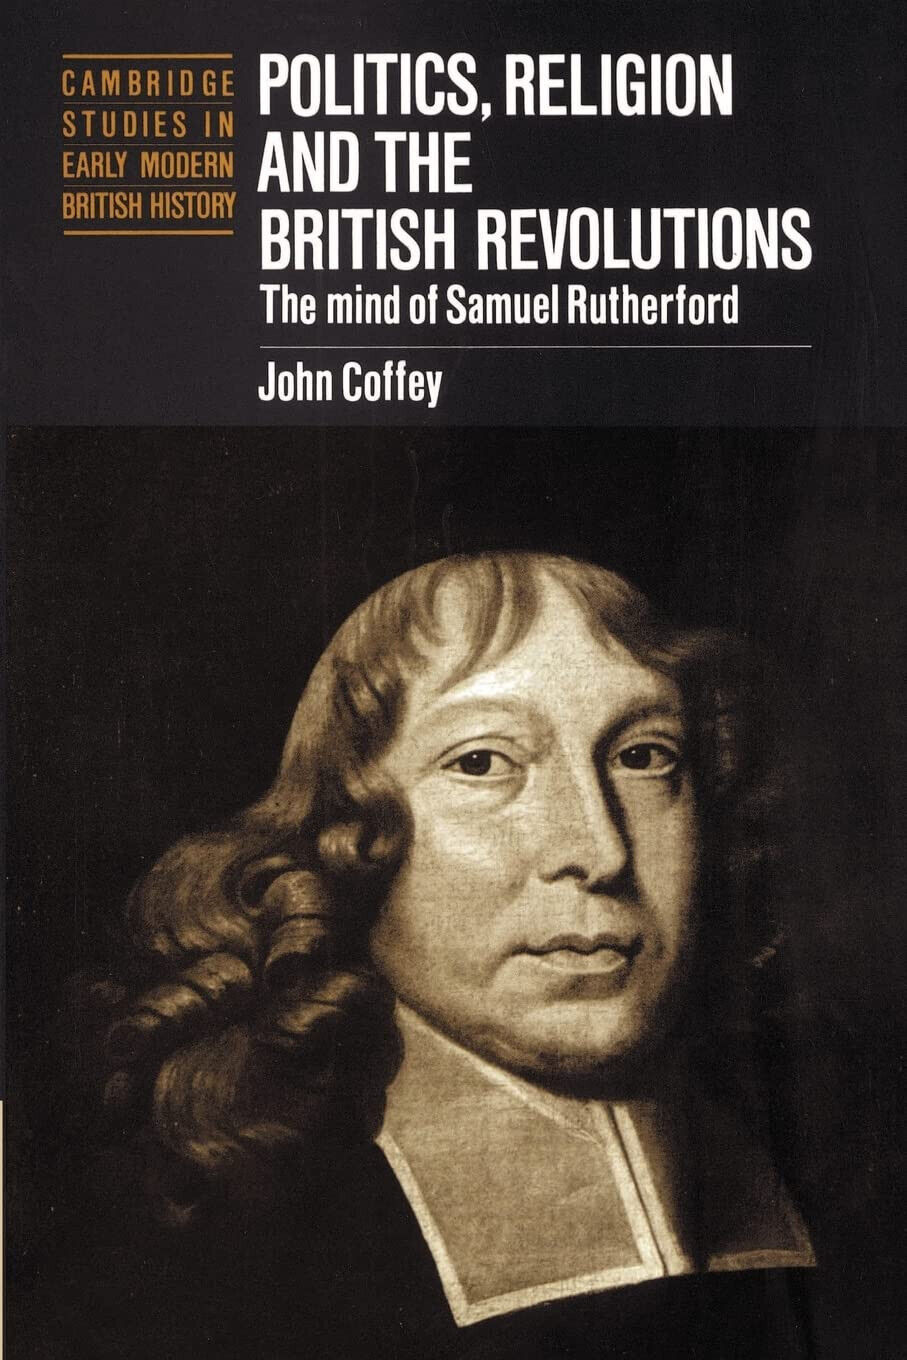 Politics, Religion and the British Revolutions - John Coffey - Cambridge, 2010